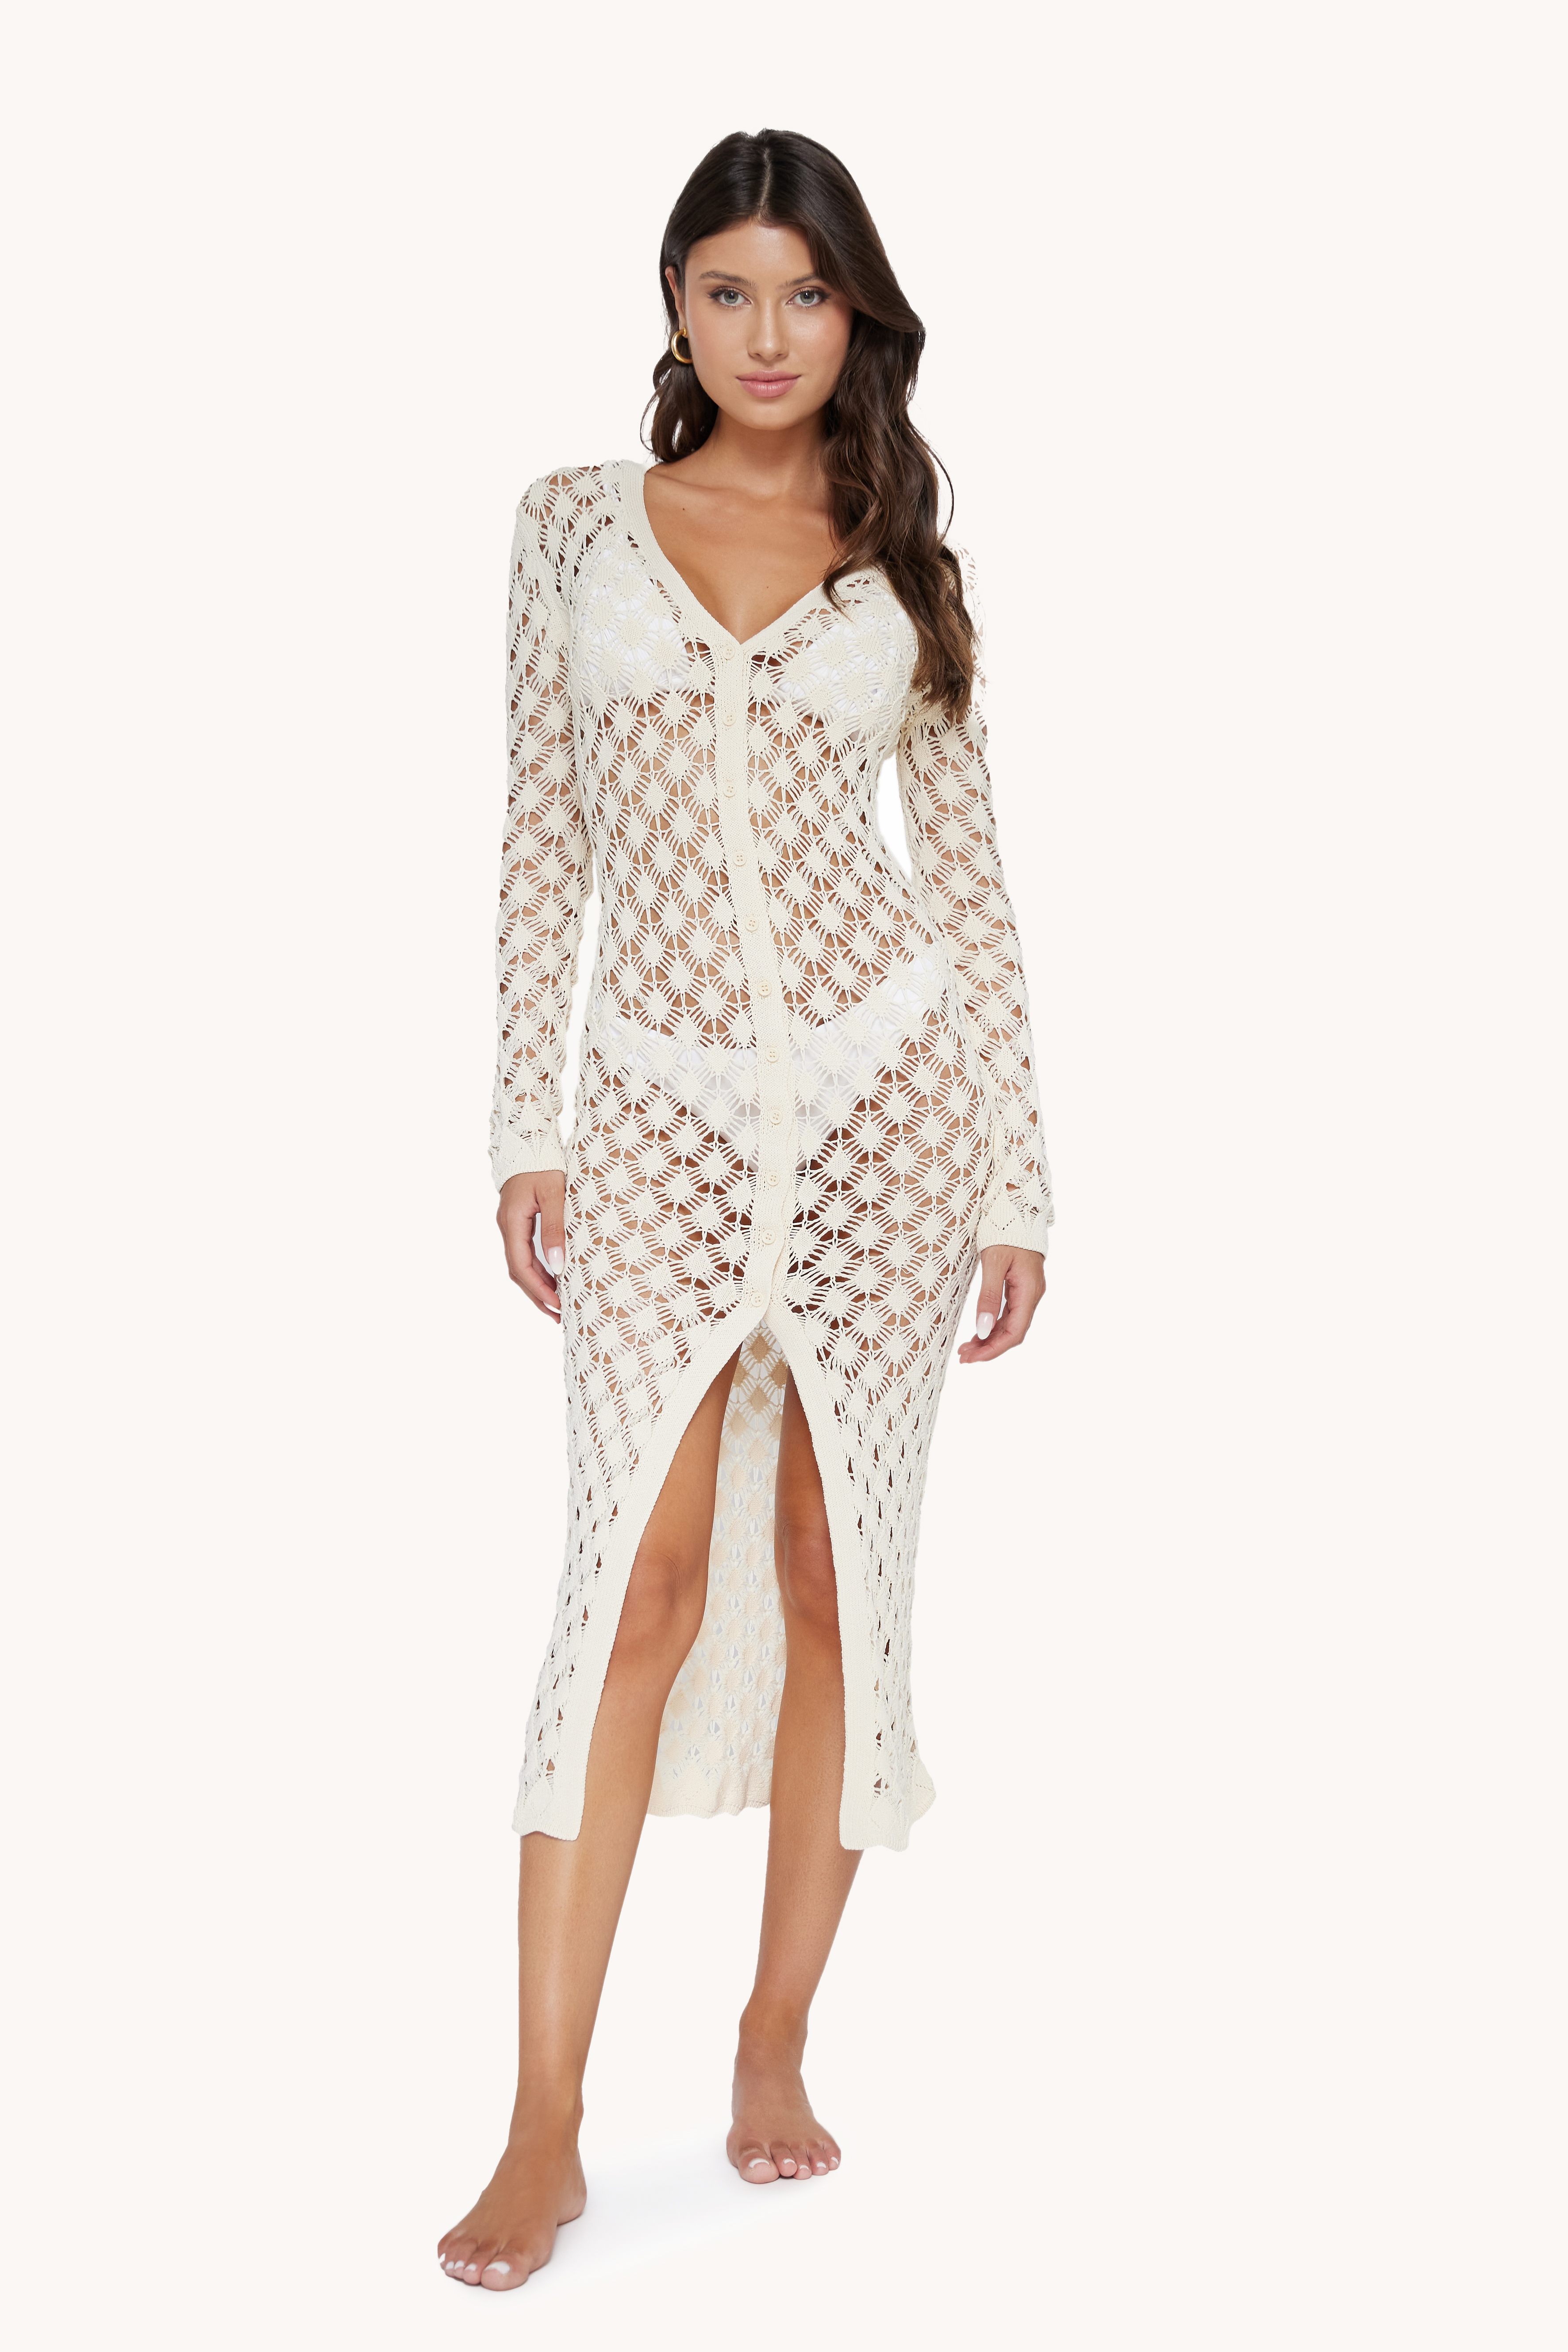 Shop the look: Navy Isla Bikini + Ivory Sweater Dress